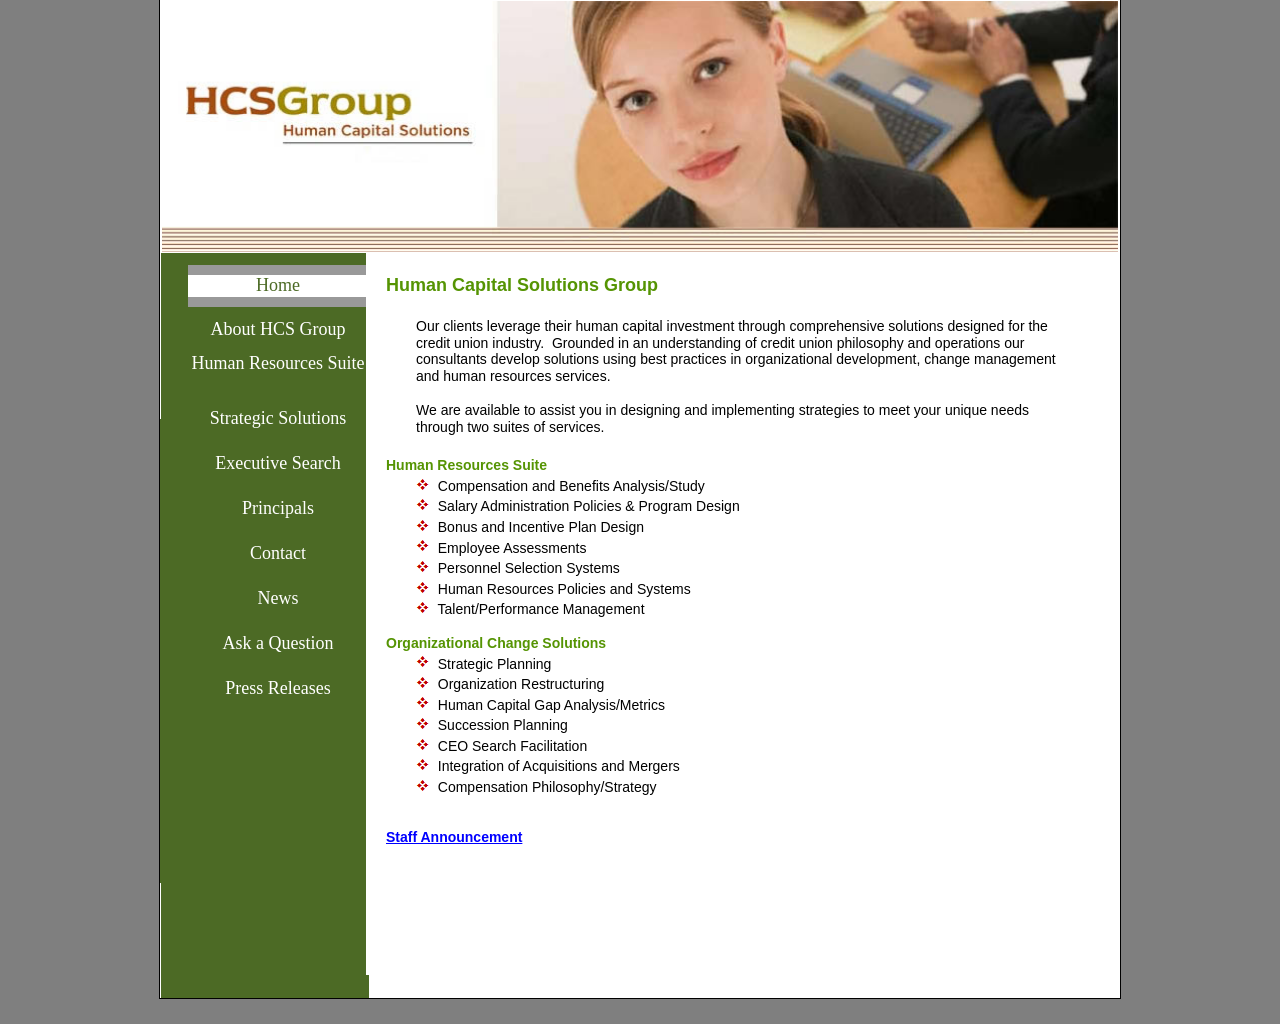 hcsgroupusa.com